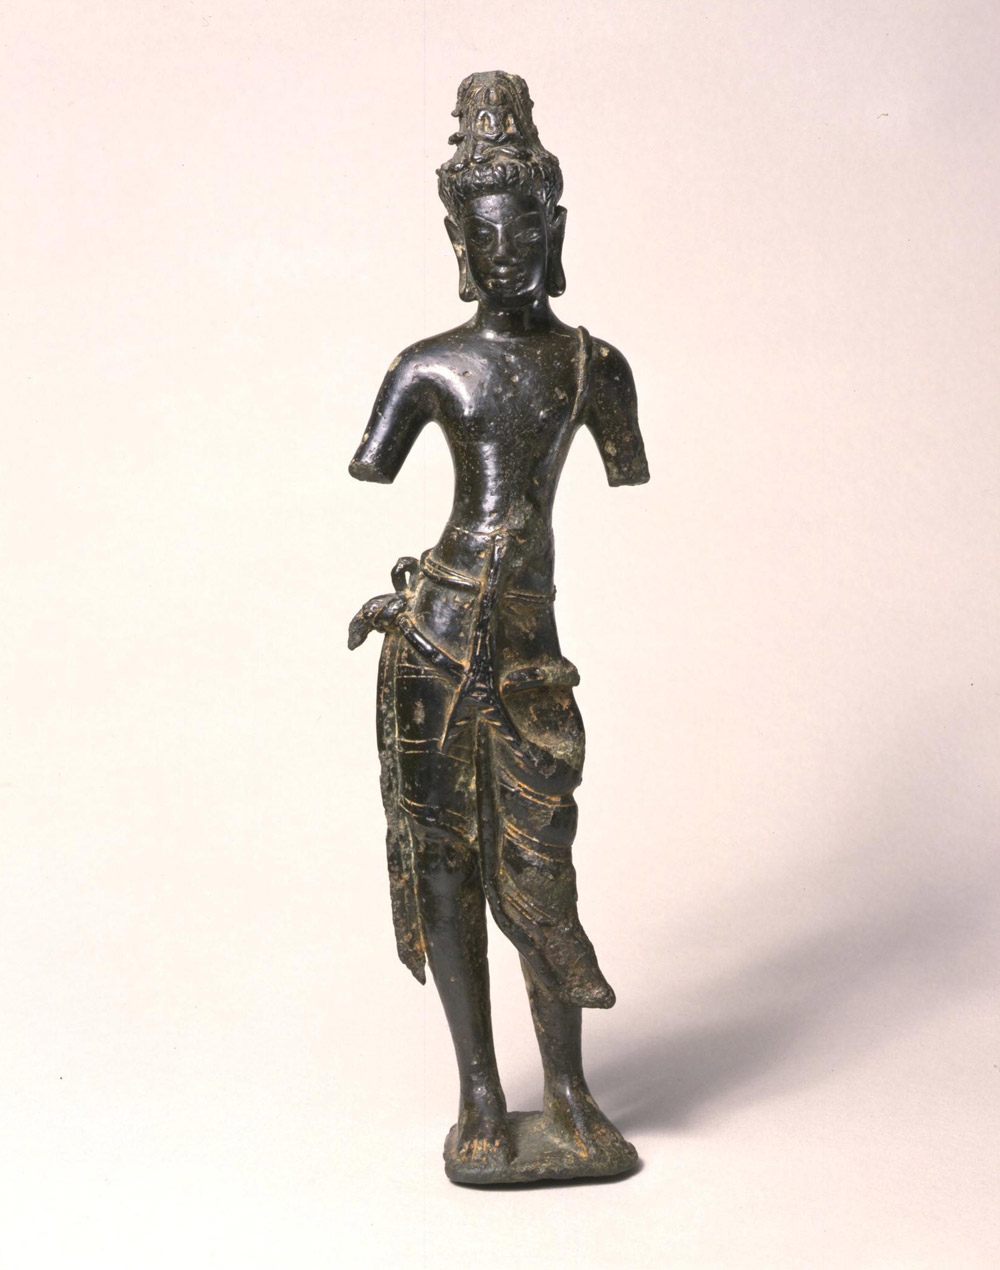 Bodhisattva Avalokiteshvara